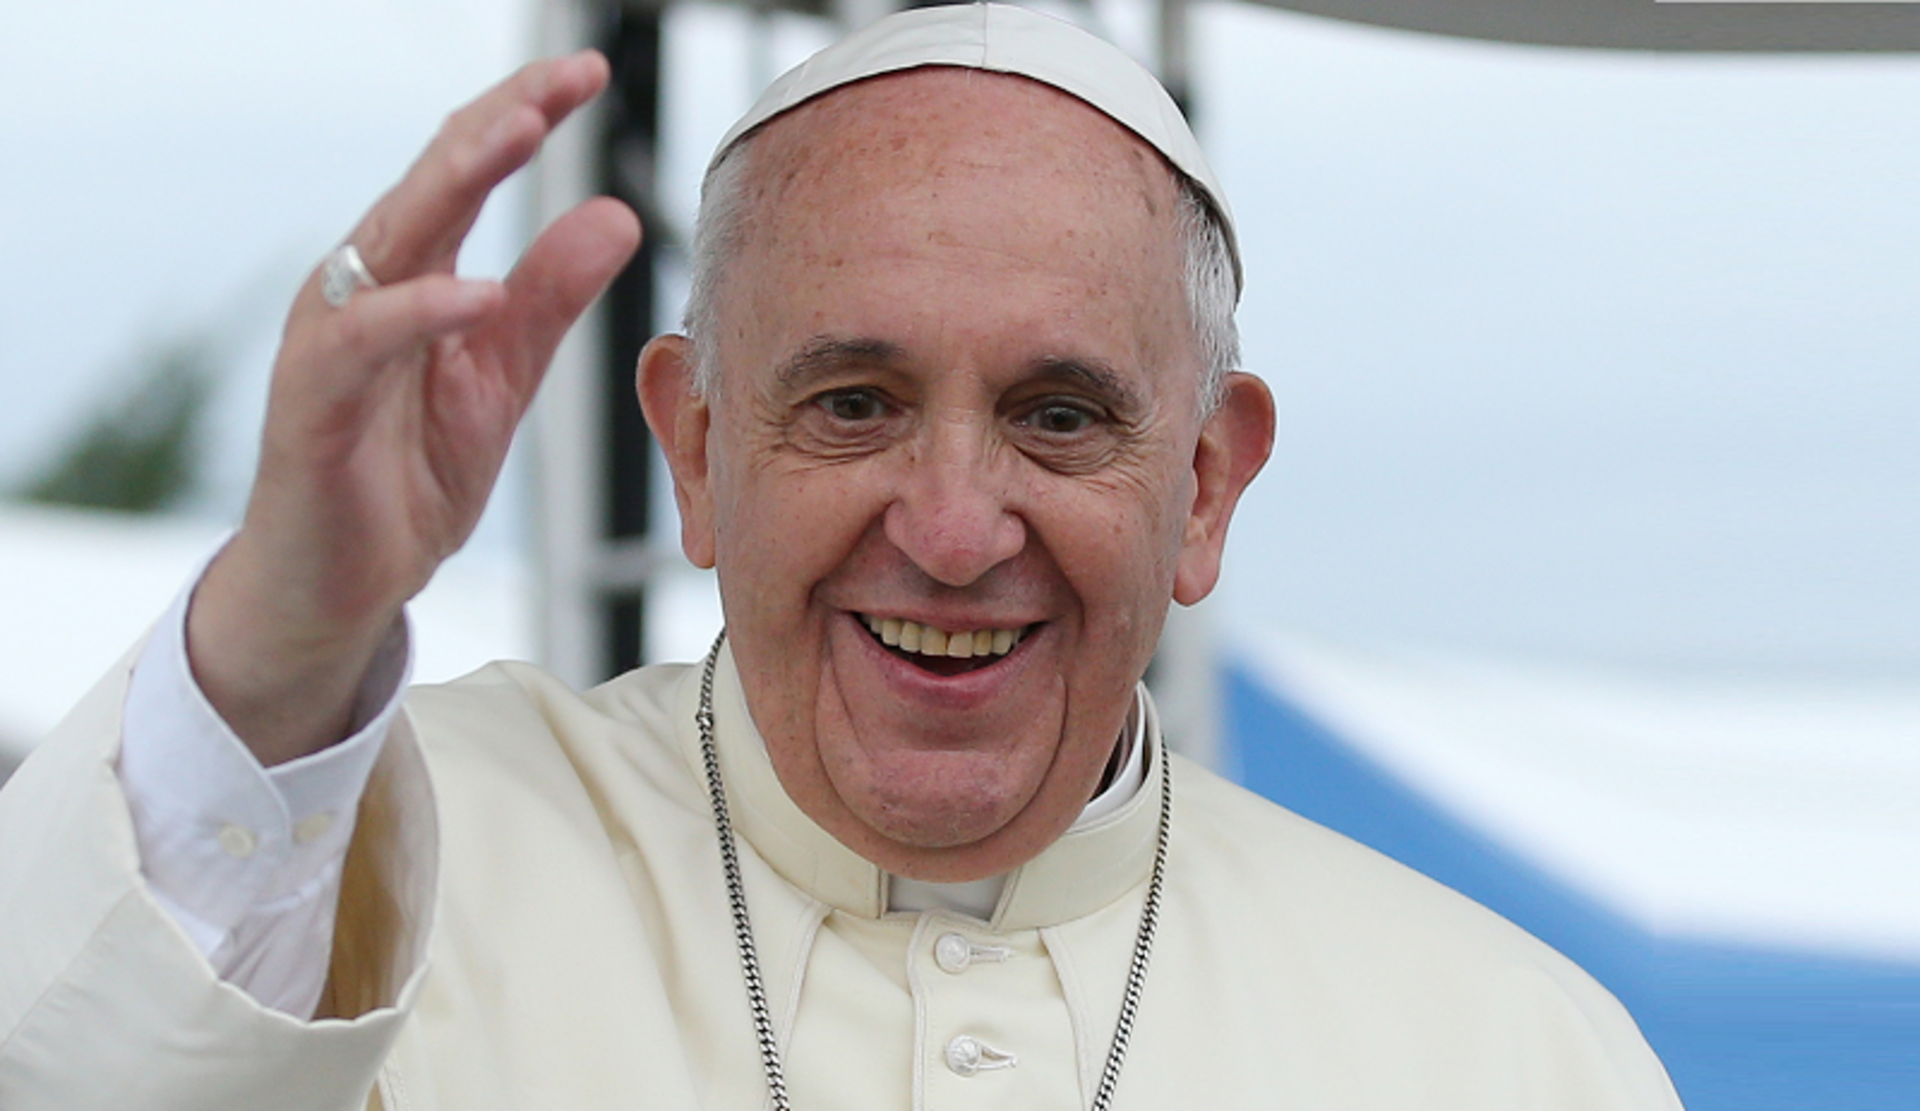 Папа Франциск. Папа Римский Франци́ск. Понтифик папа Римский Франциск. Франциск (папа Римский) фото. Что есть папа римский